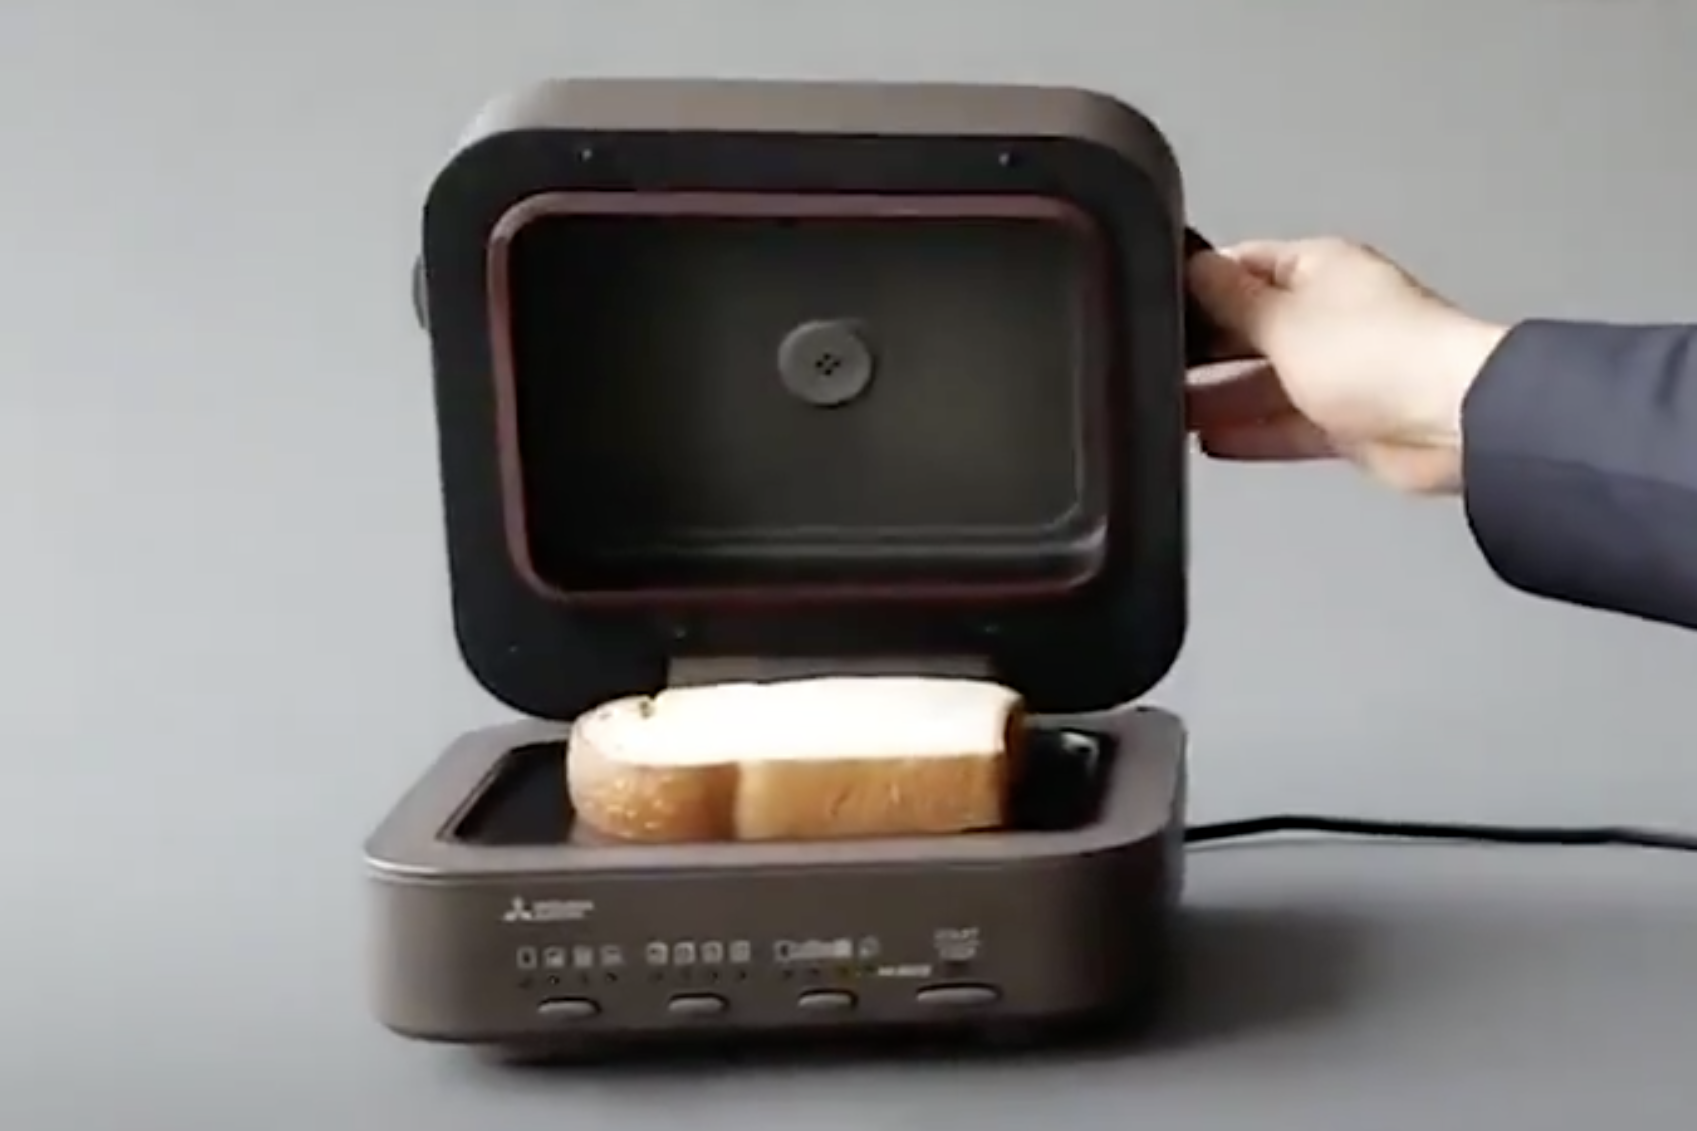 https://static.independent.co.uk/s3fs-public/thumbnails/image/2019/05/17/15/mitsubishi-toaster-03.png